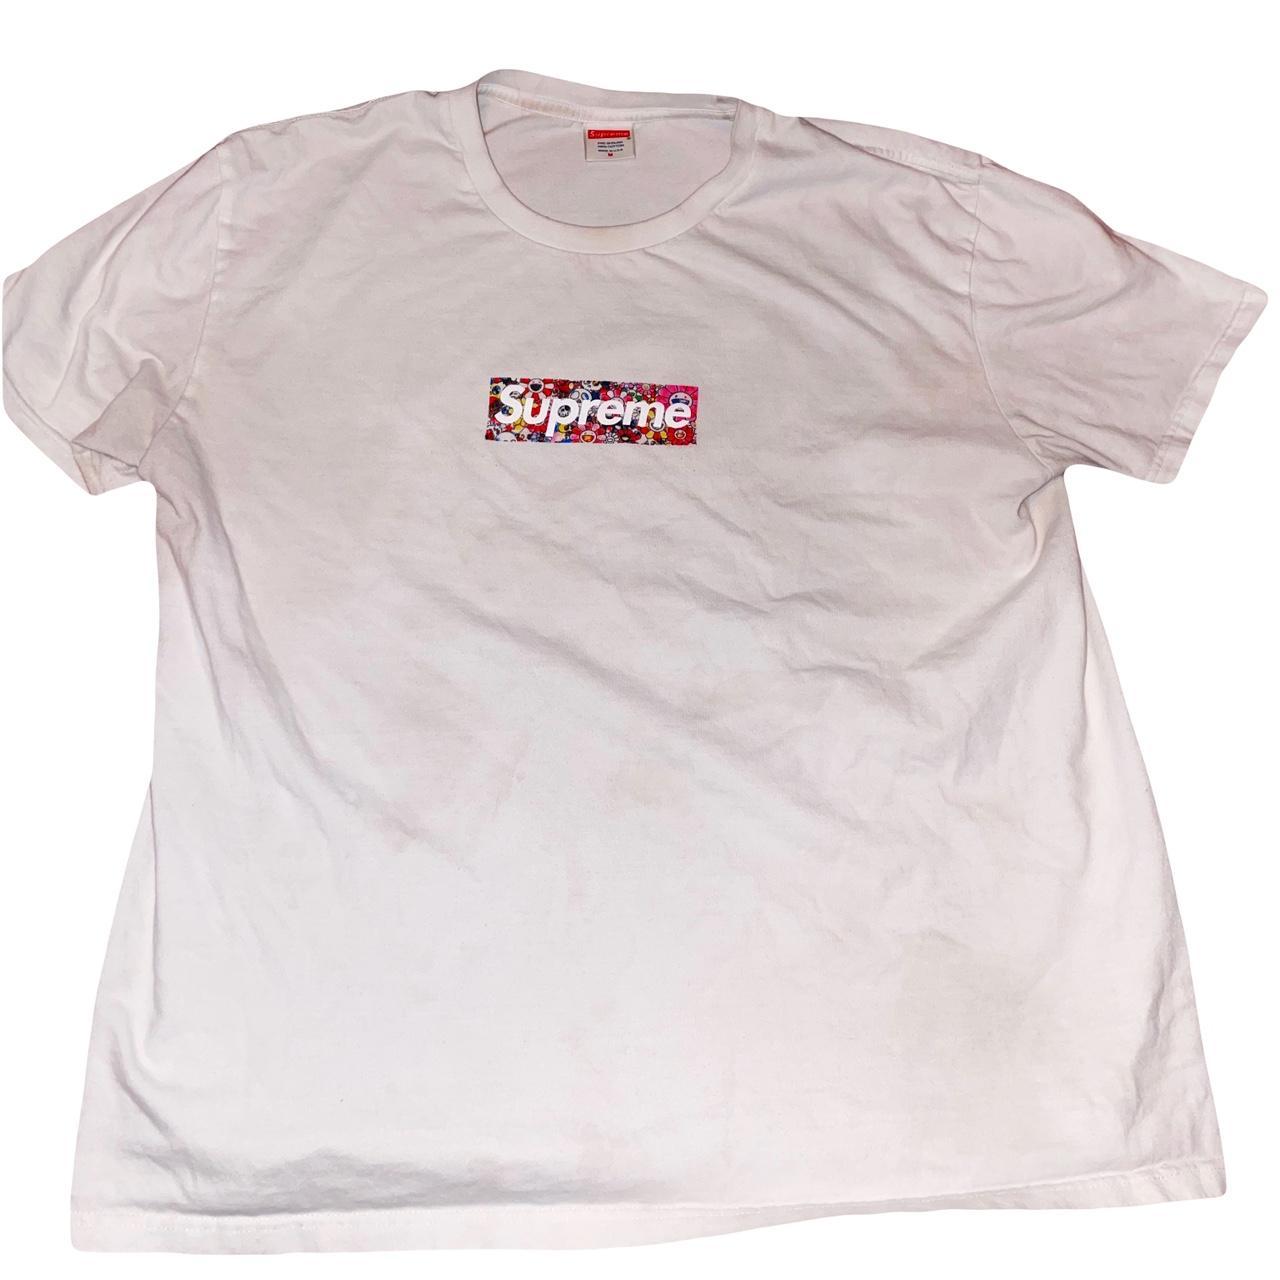 Supreme Red on White Box Logo Tee, Size Large. Used - Depop